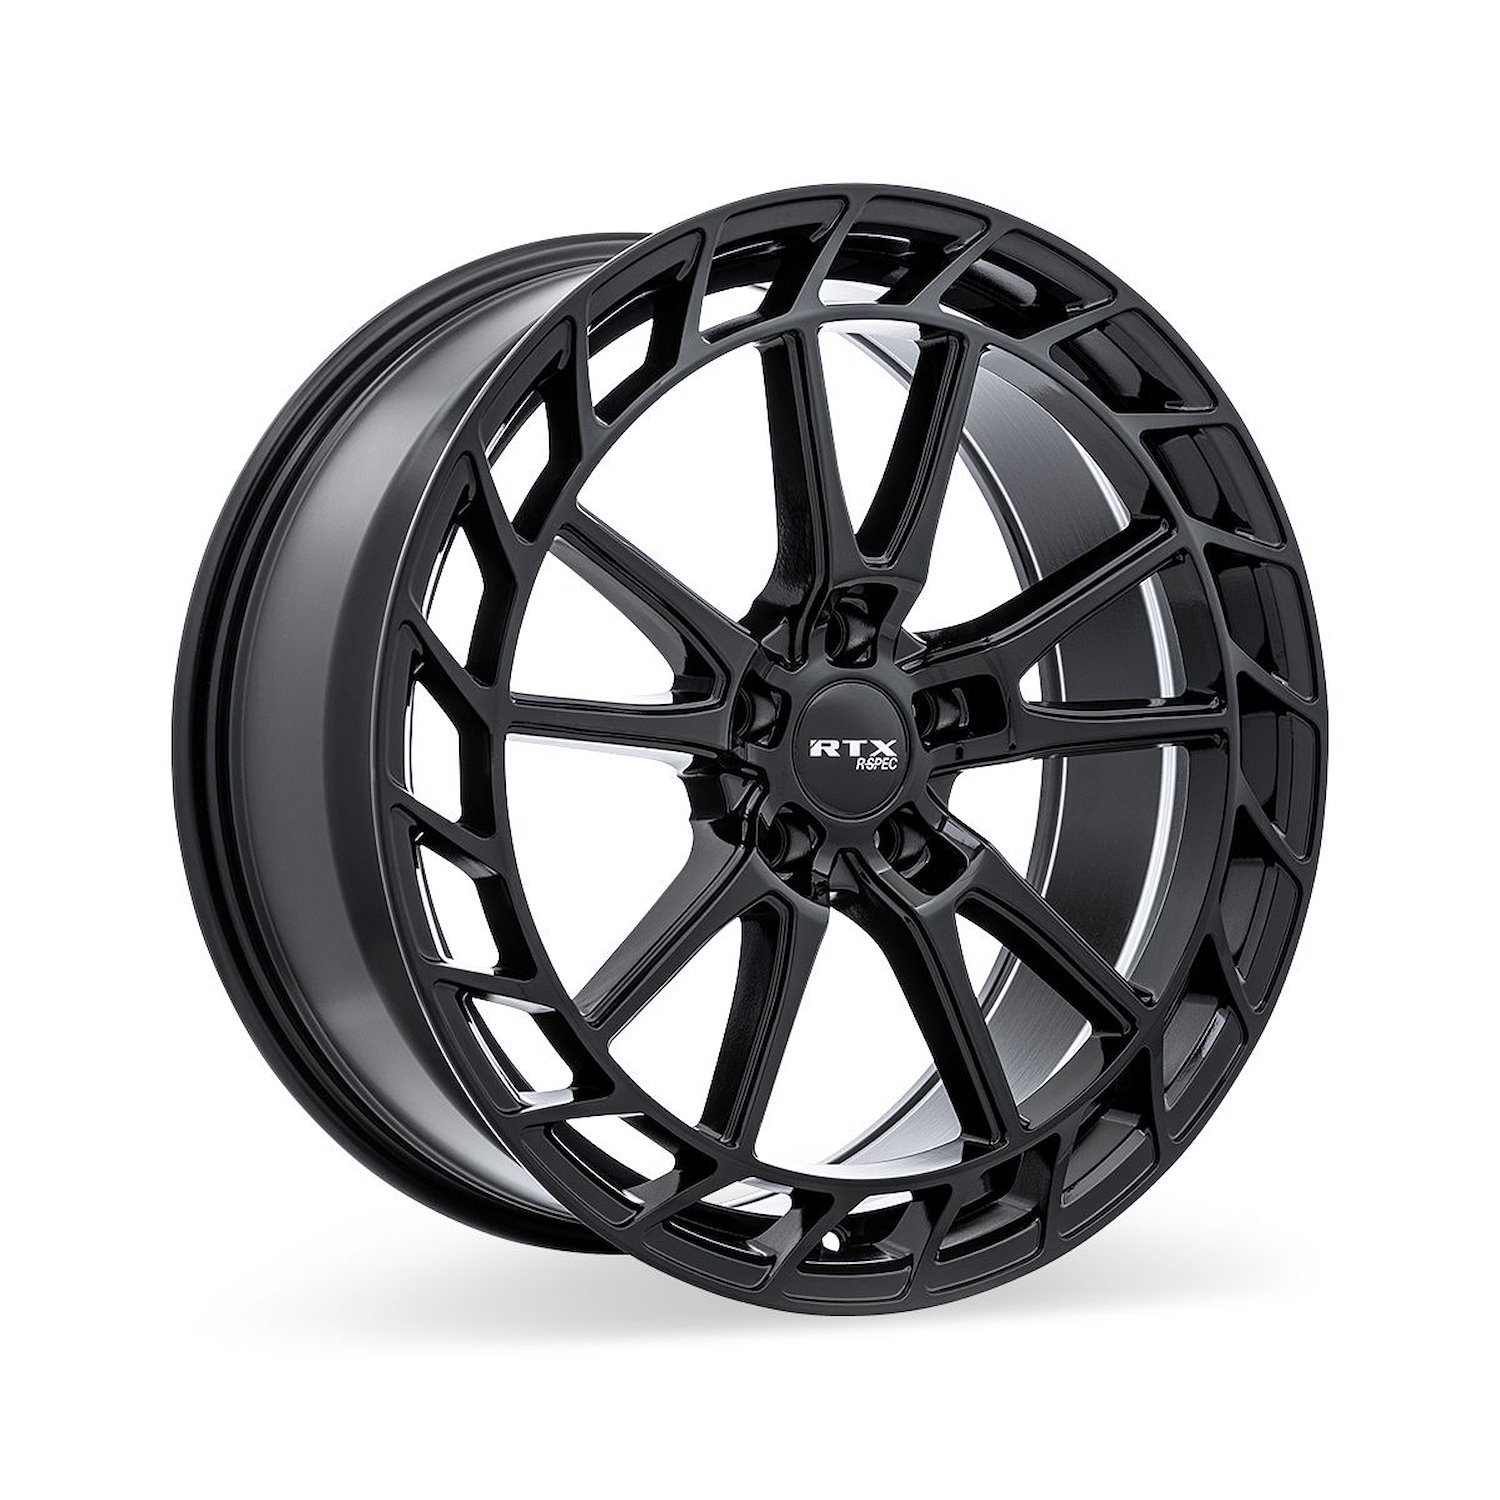 083074 R-Spec Series RS05 Wheel [Size: 18" x 8"] Gloss Black Finish